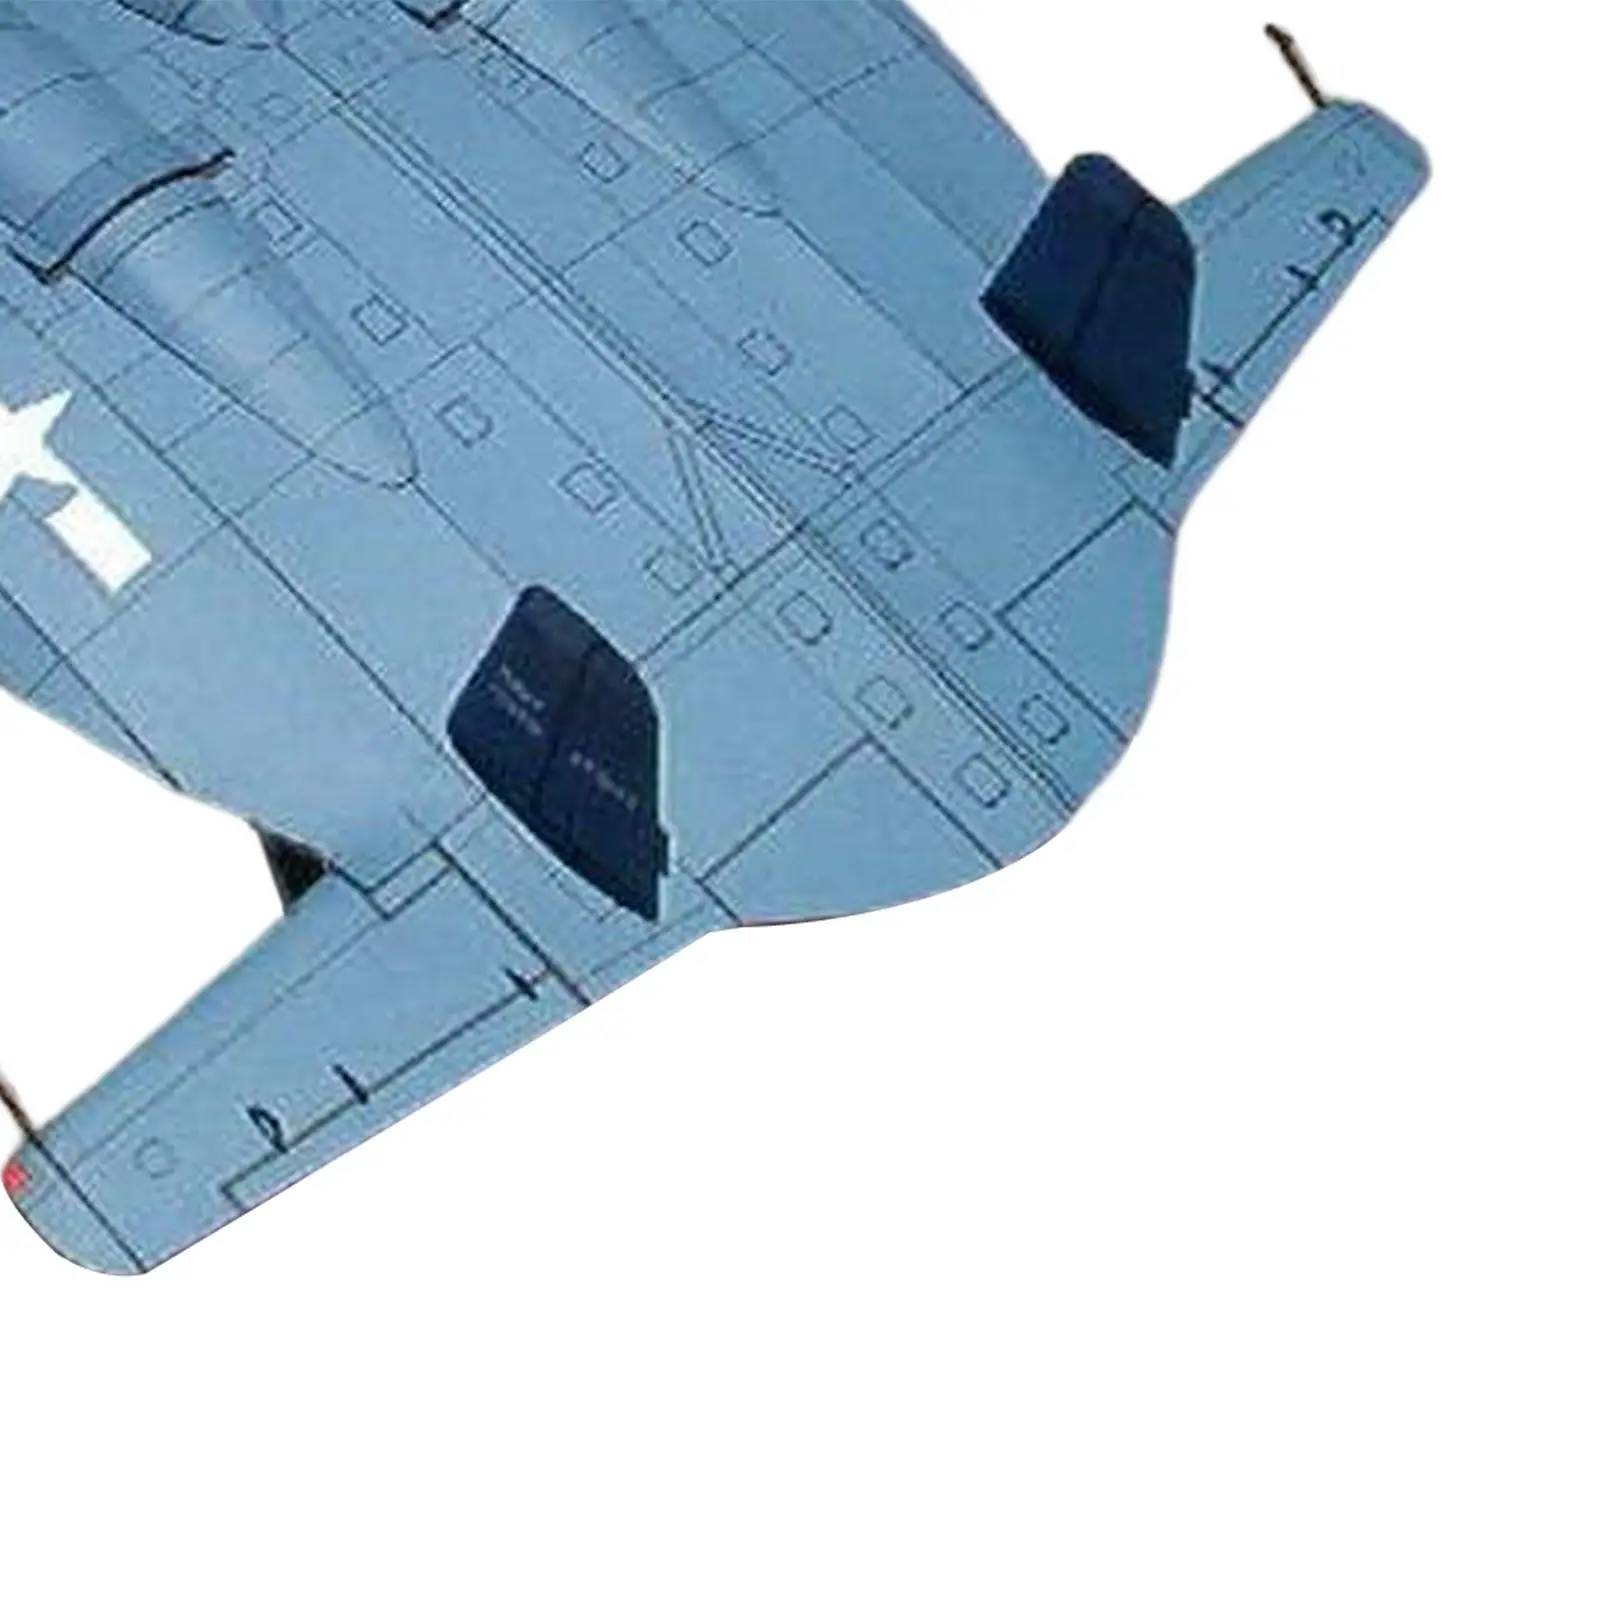 Air Aviation Fighter Aircraft Paper Model Simulation Papercraft 3D for Shelf